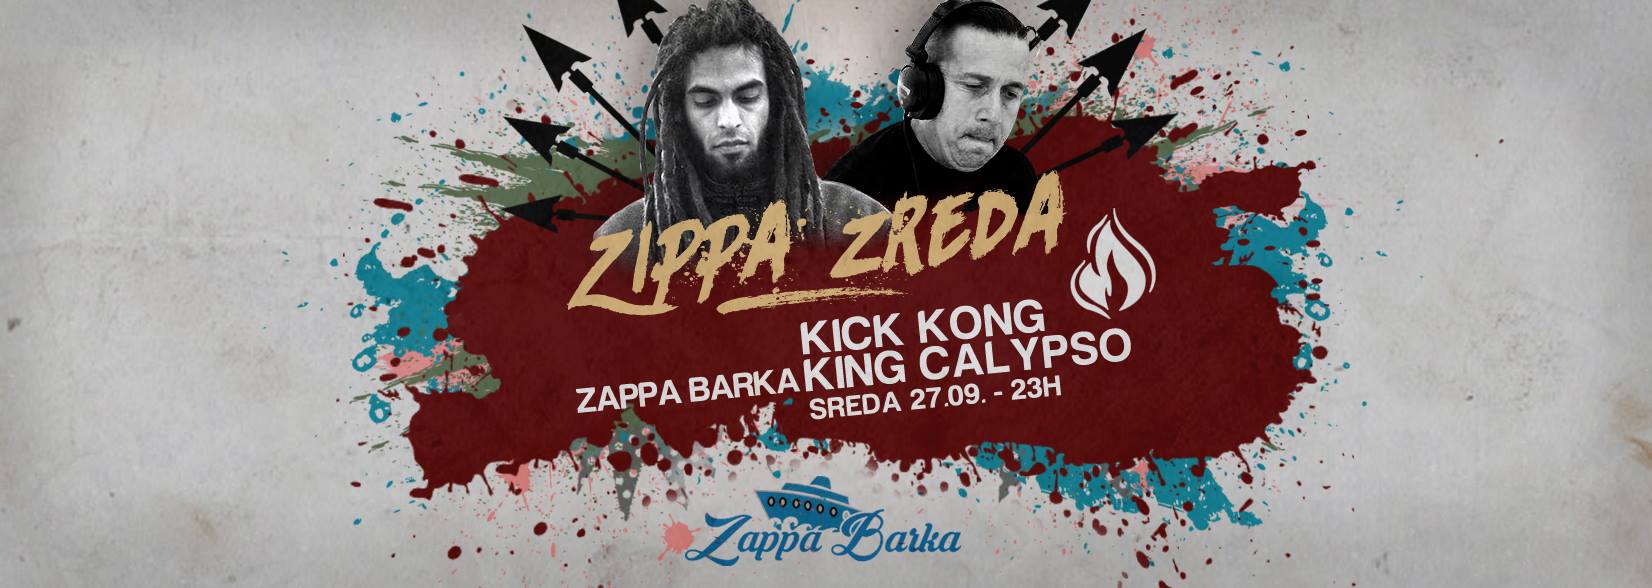 Zippa Zreda – Kick Kong & King Calypso, 27.09.2017, Beograd